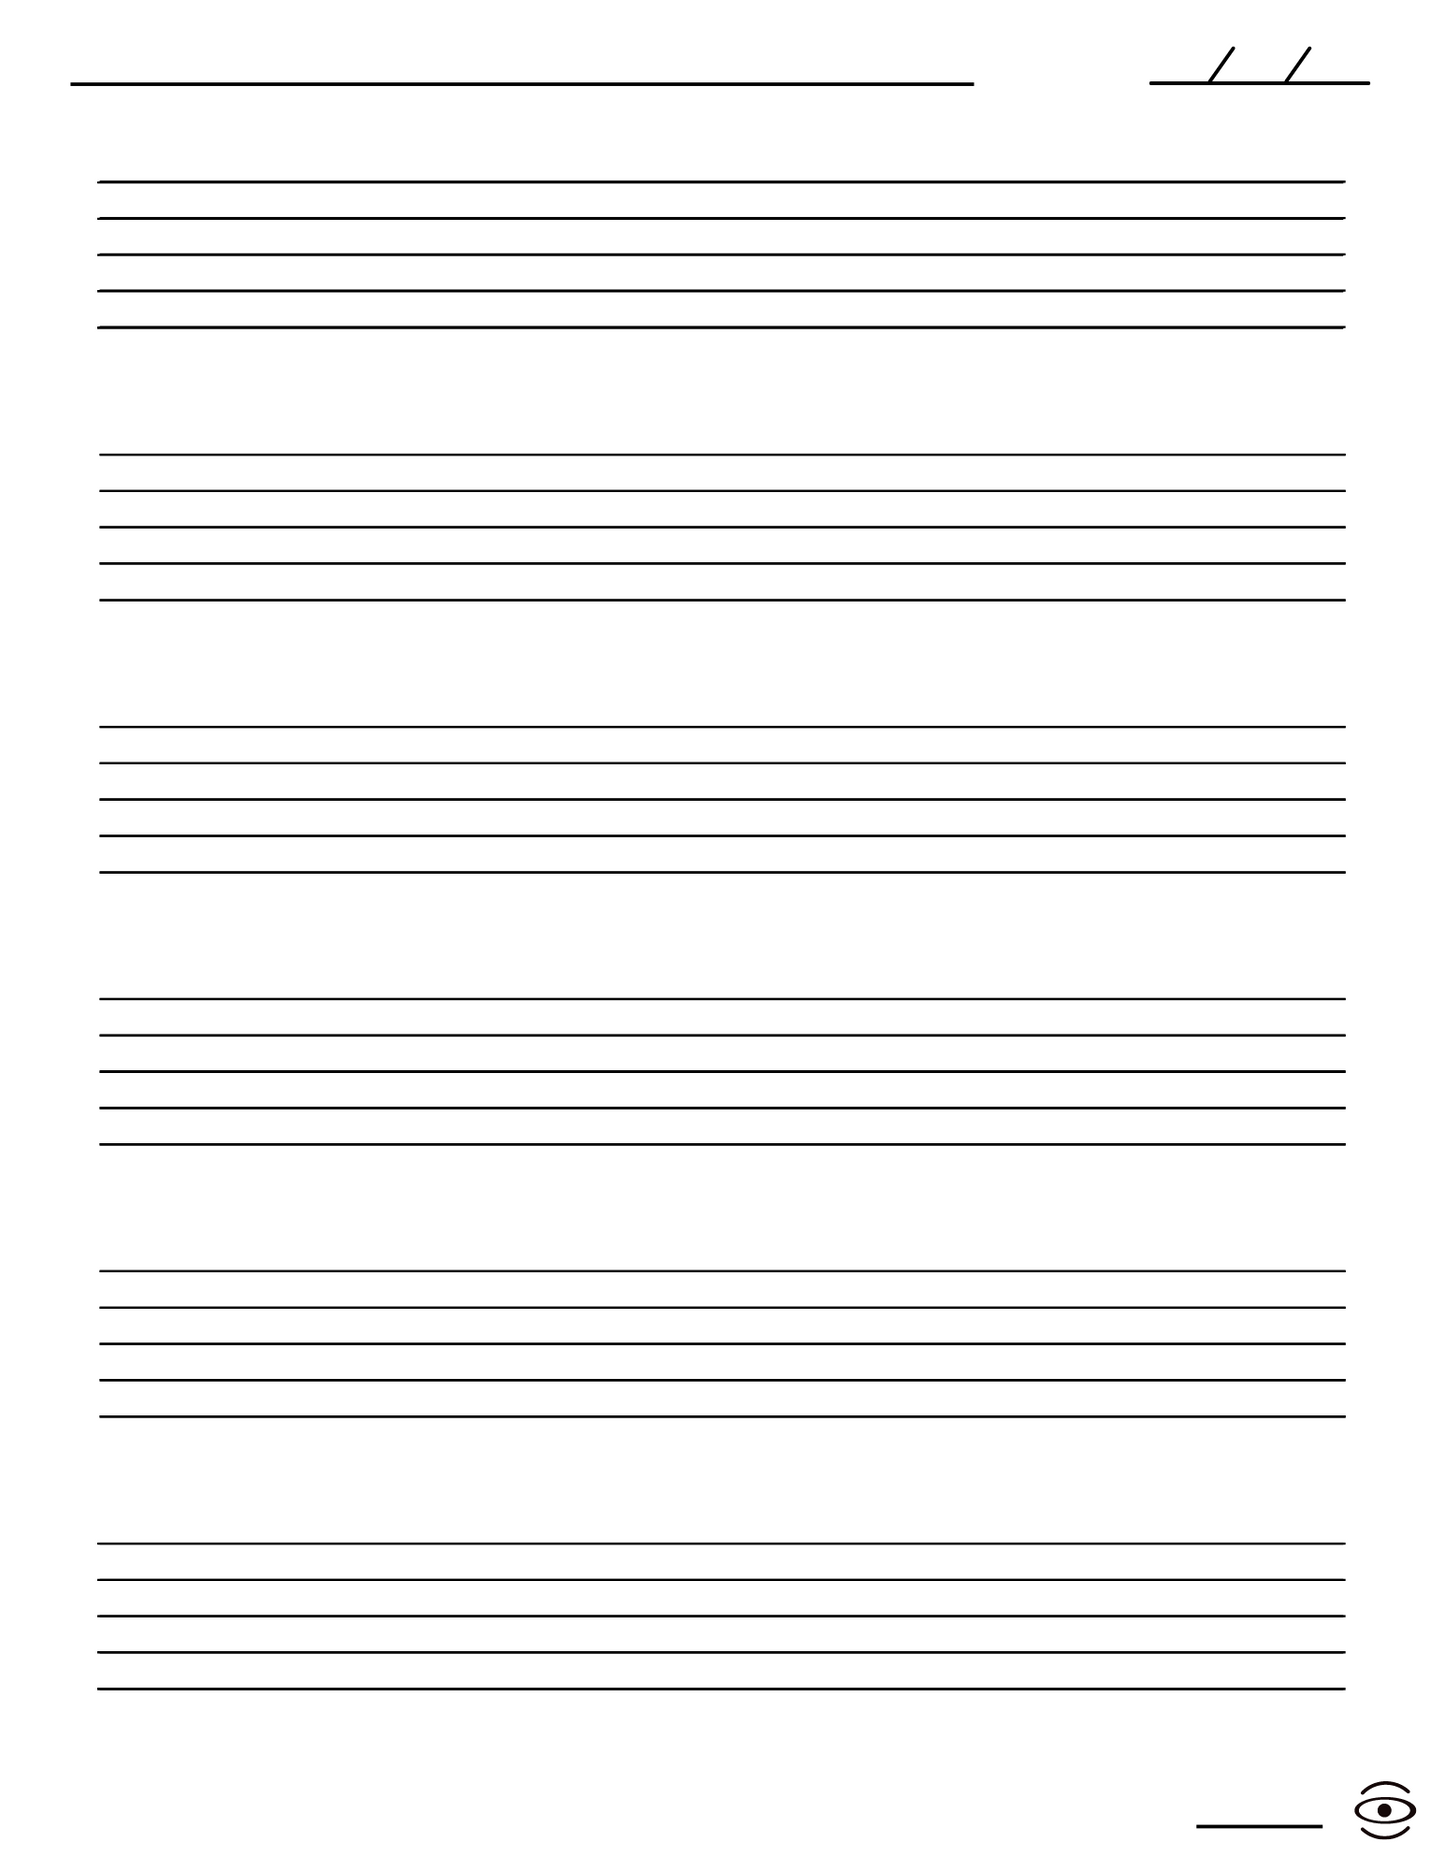 Jaha Musician Wide Staff Manuscript Paper Digital Notebook